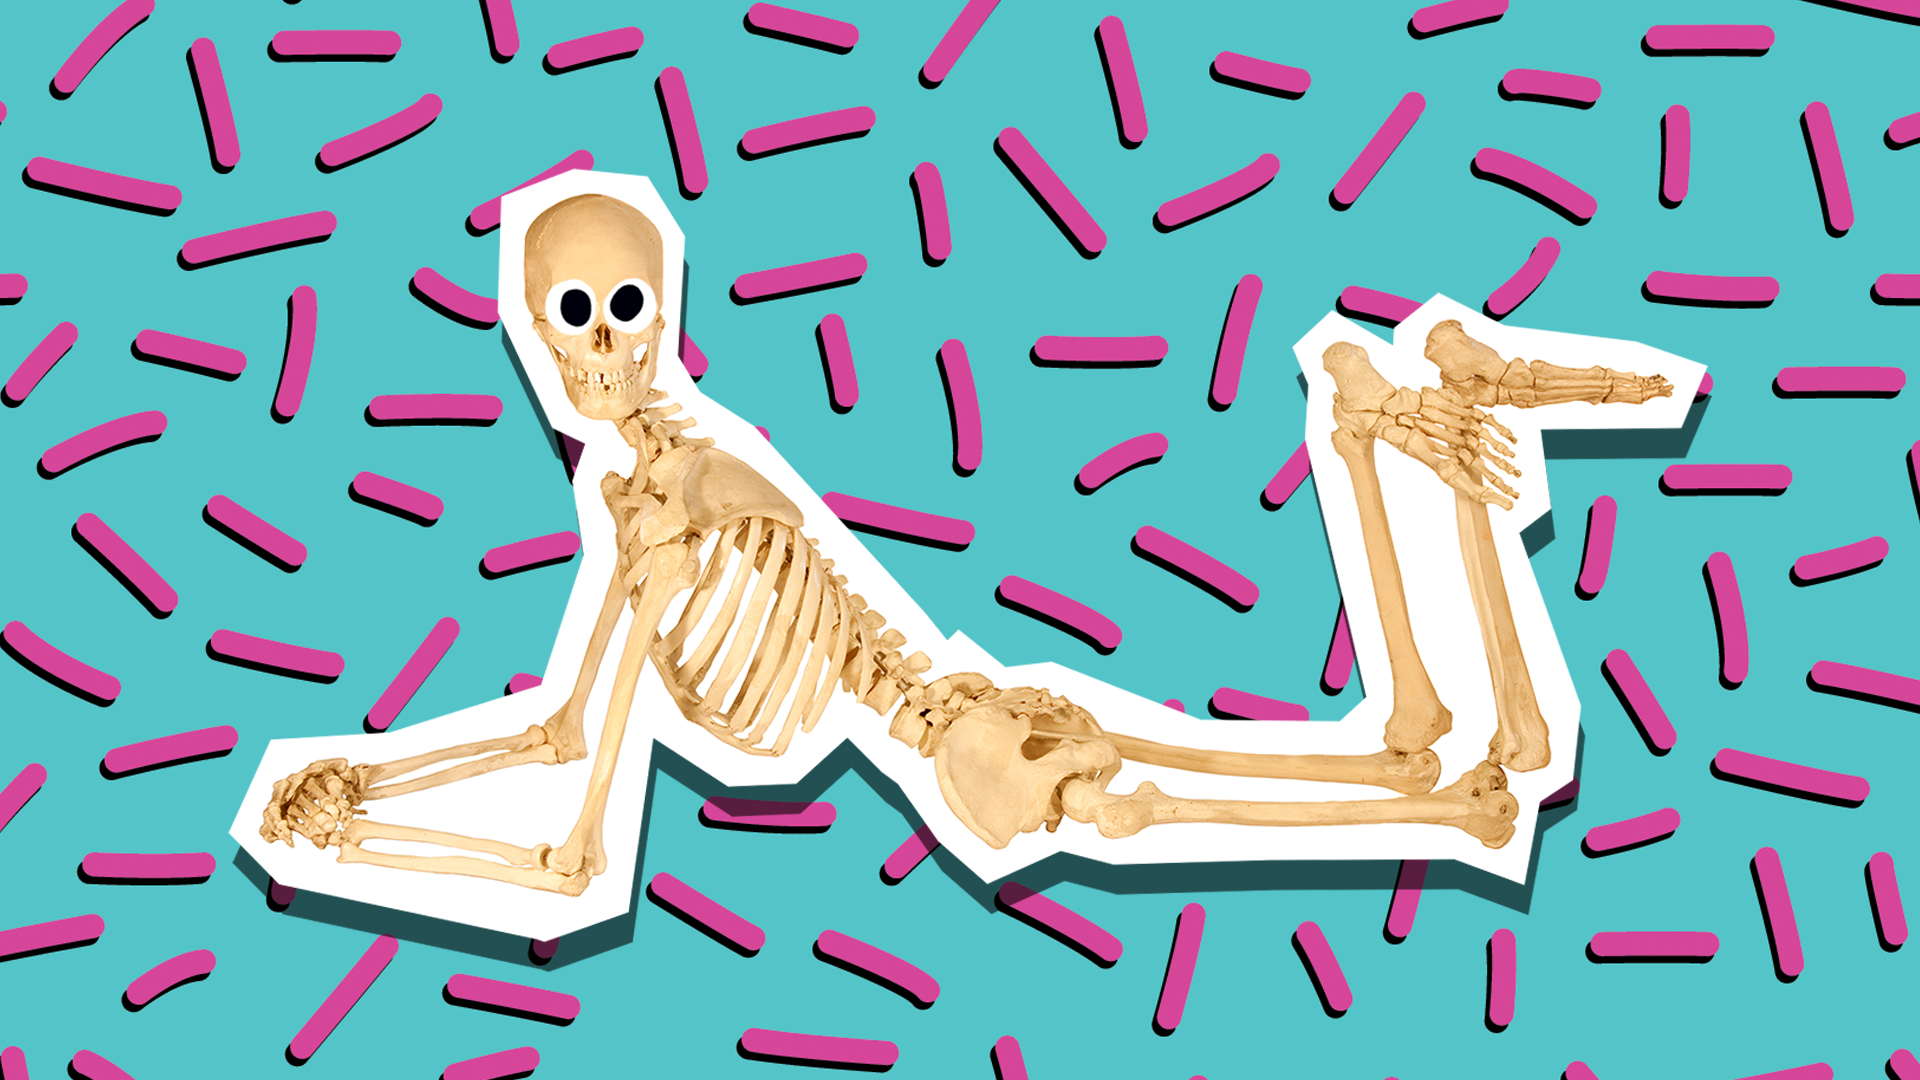 Skeleton lying down